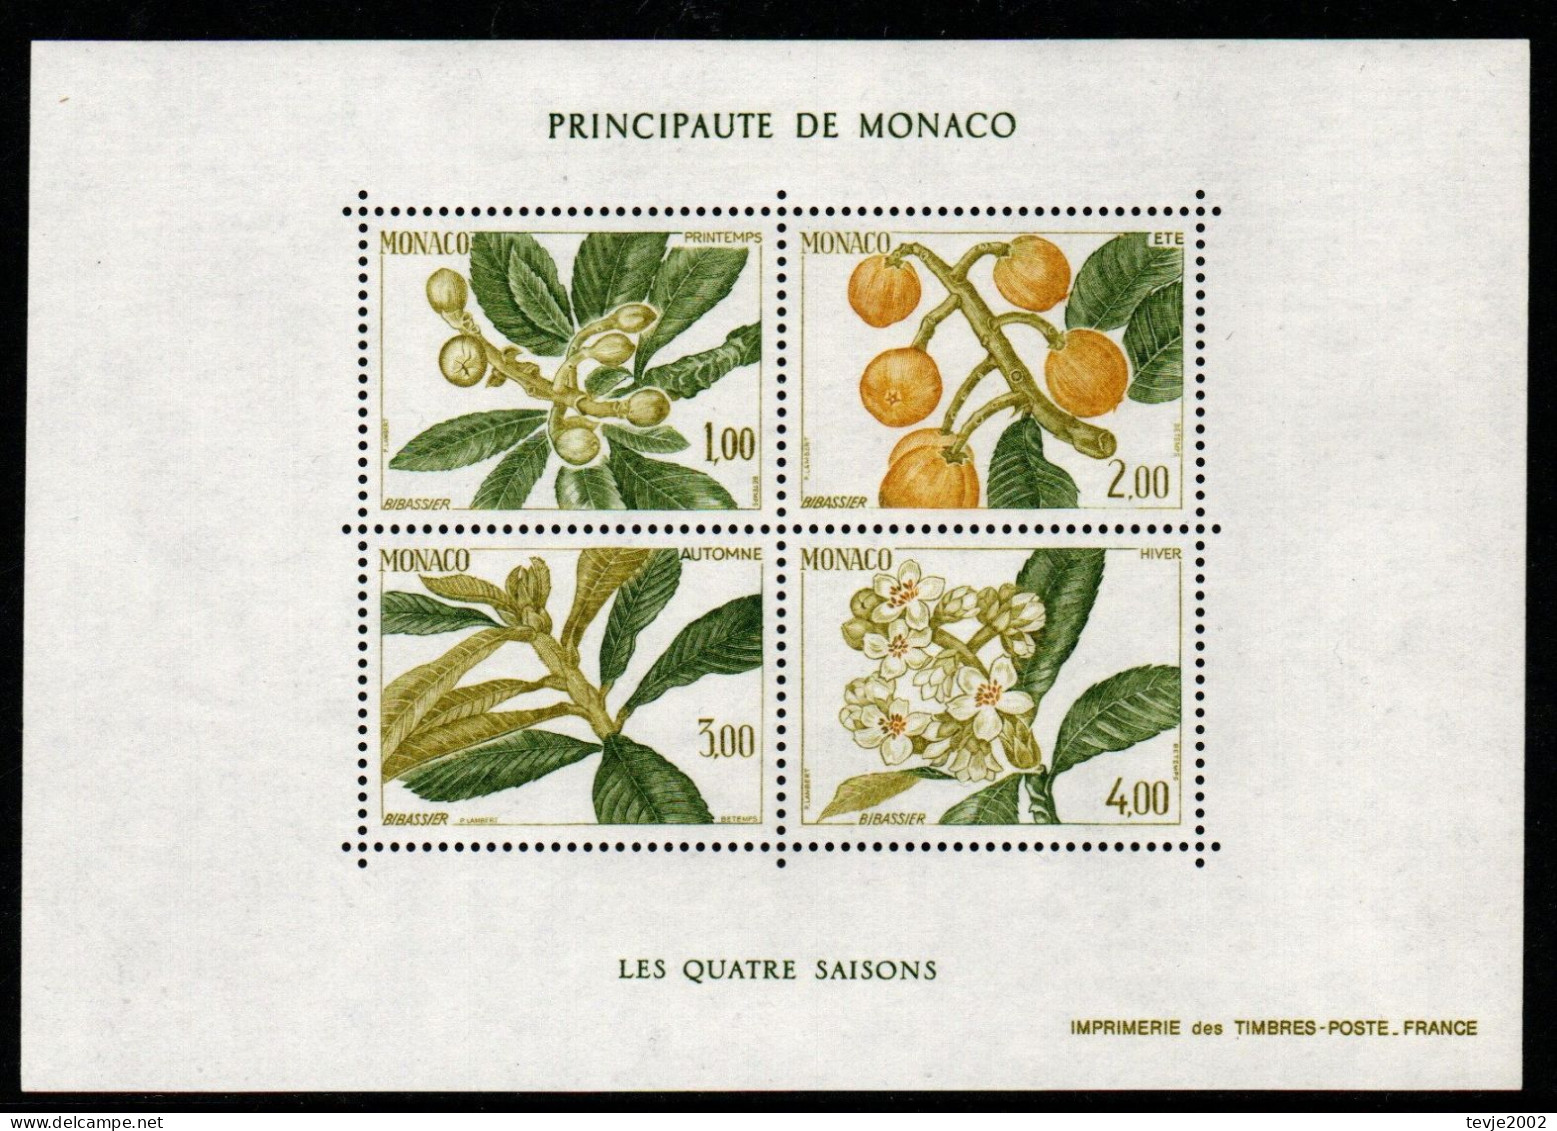 Monaco 1985 - Mi.Nr. Block 29 - Postfrisch MNH - Bäume Trees - Bomen